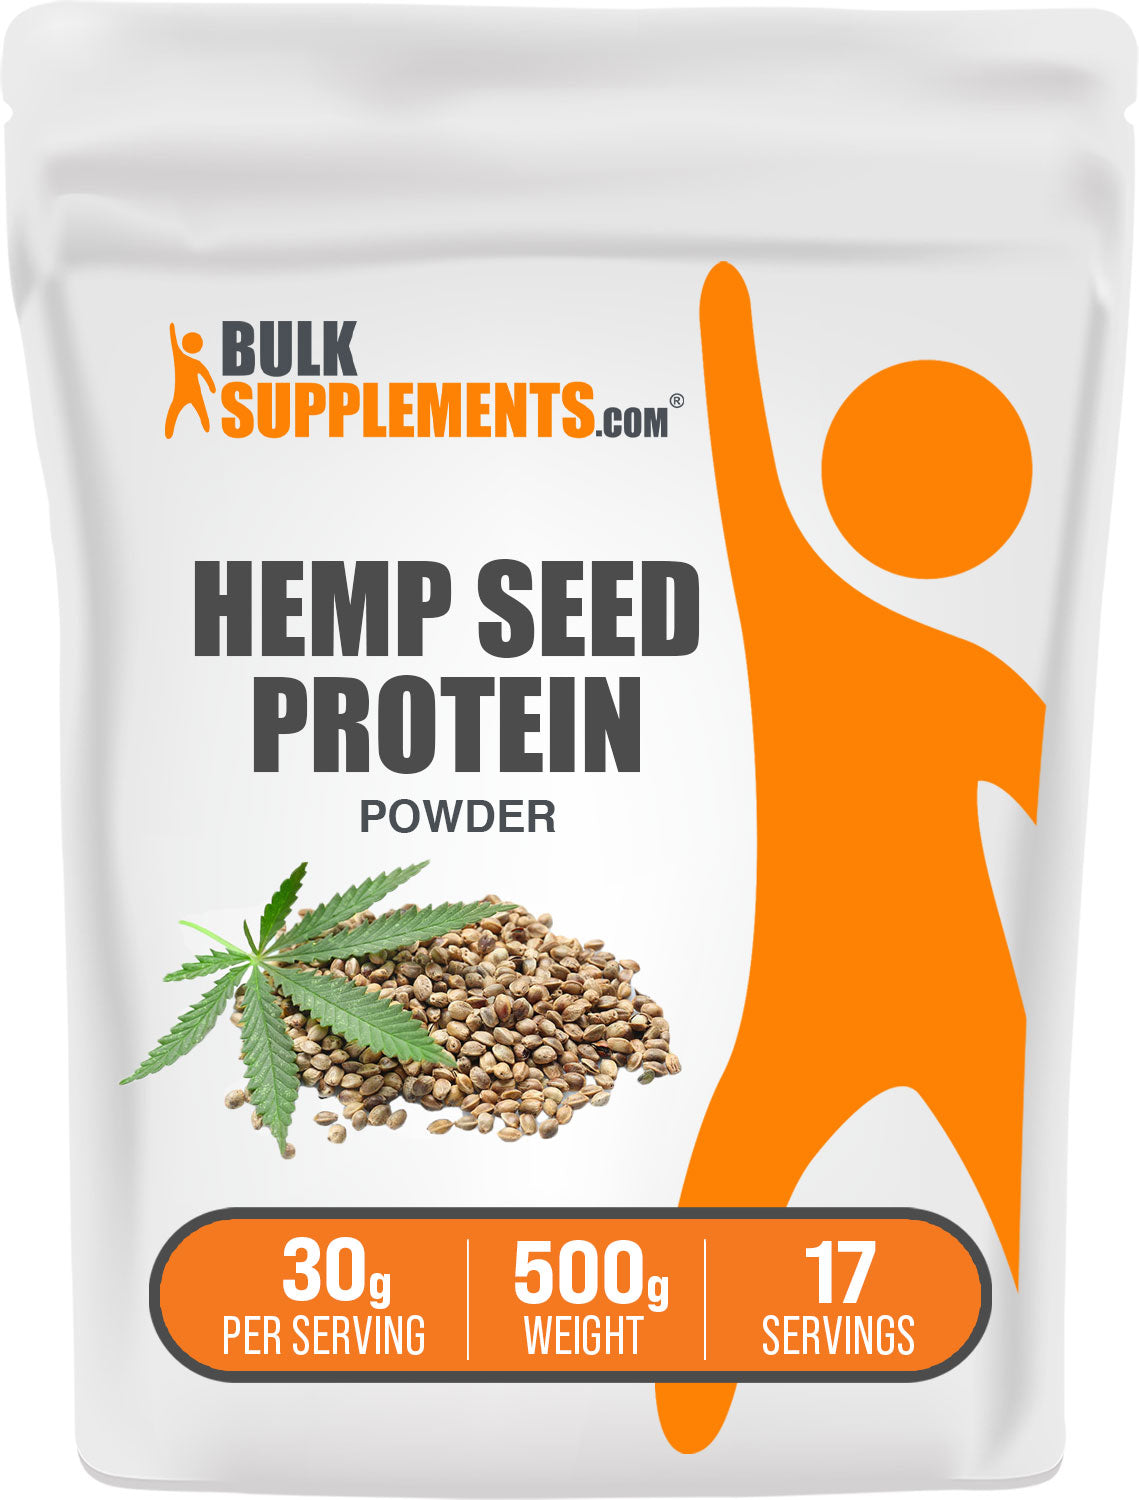 BulkSupplements.com Hemp Seed Protein Powder 500g Bag